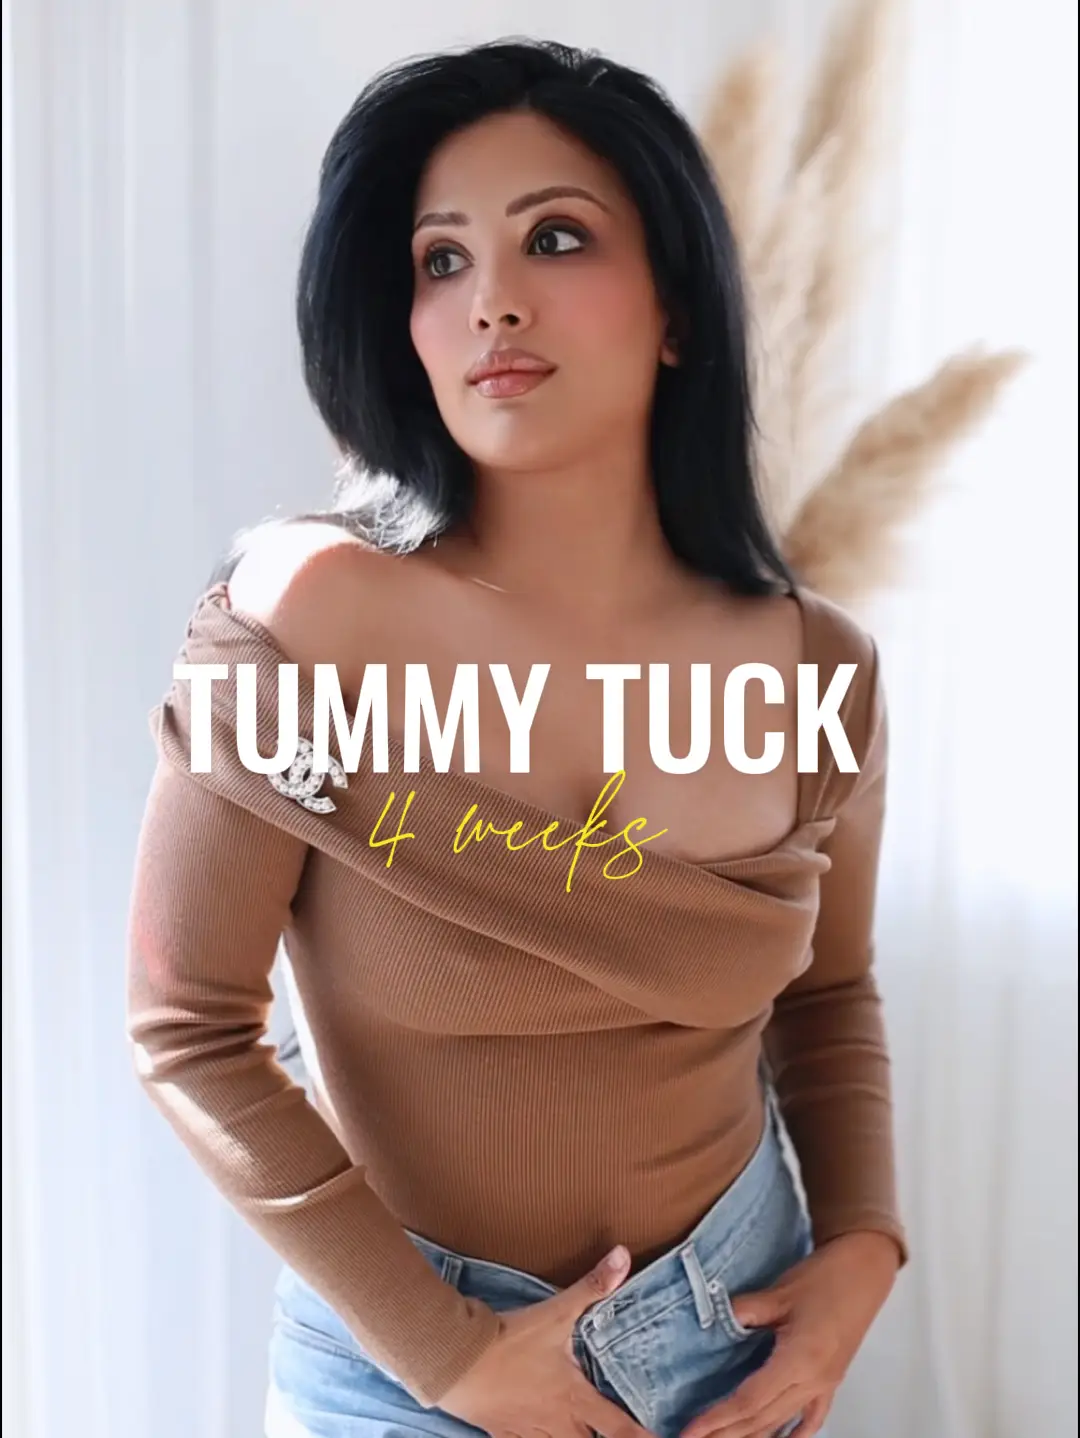 tummy tuvk - Lemon8 Search